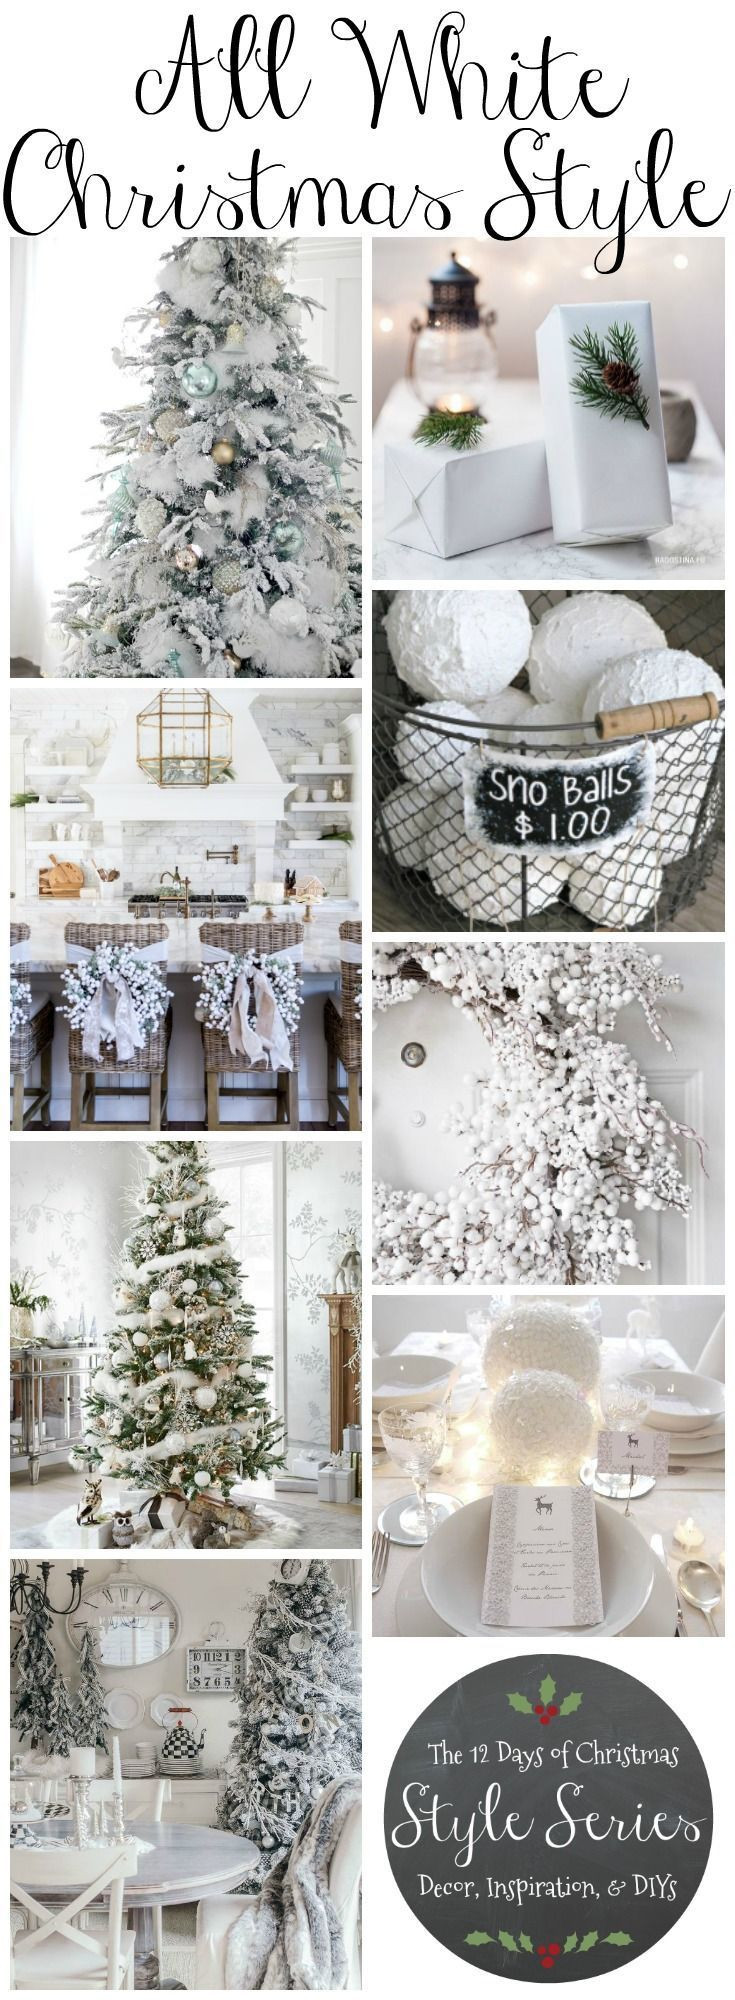 Best ideas about Winter Wonderland Decorations DIY
. Save or Pin Winter Wonderland Decorating Ideas Diy Now.